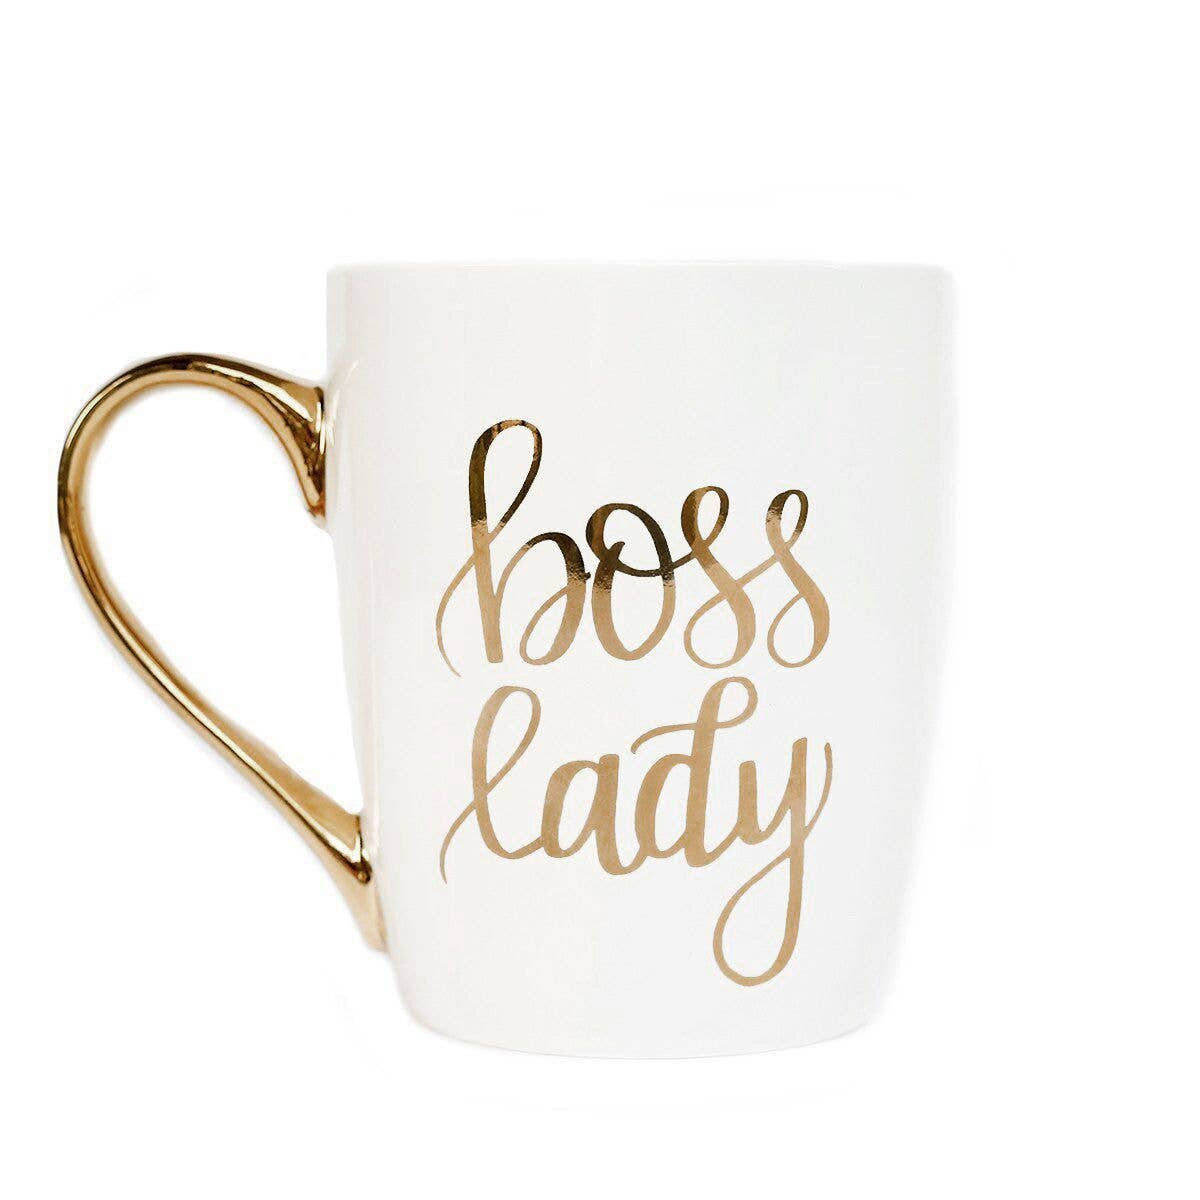 Boss Lady - Gold and White Coffee Mug - 16 oz